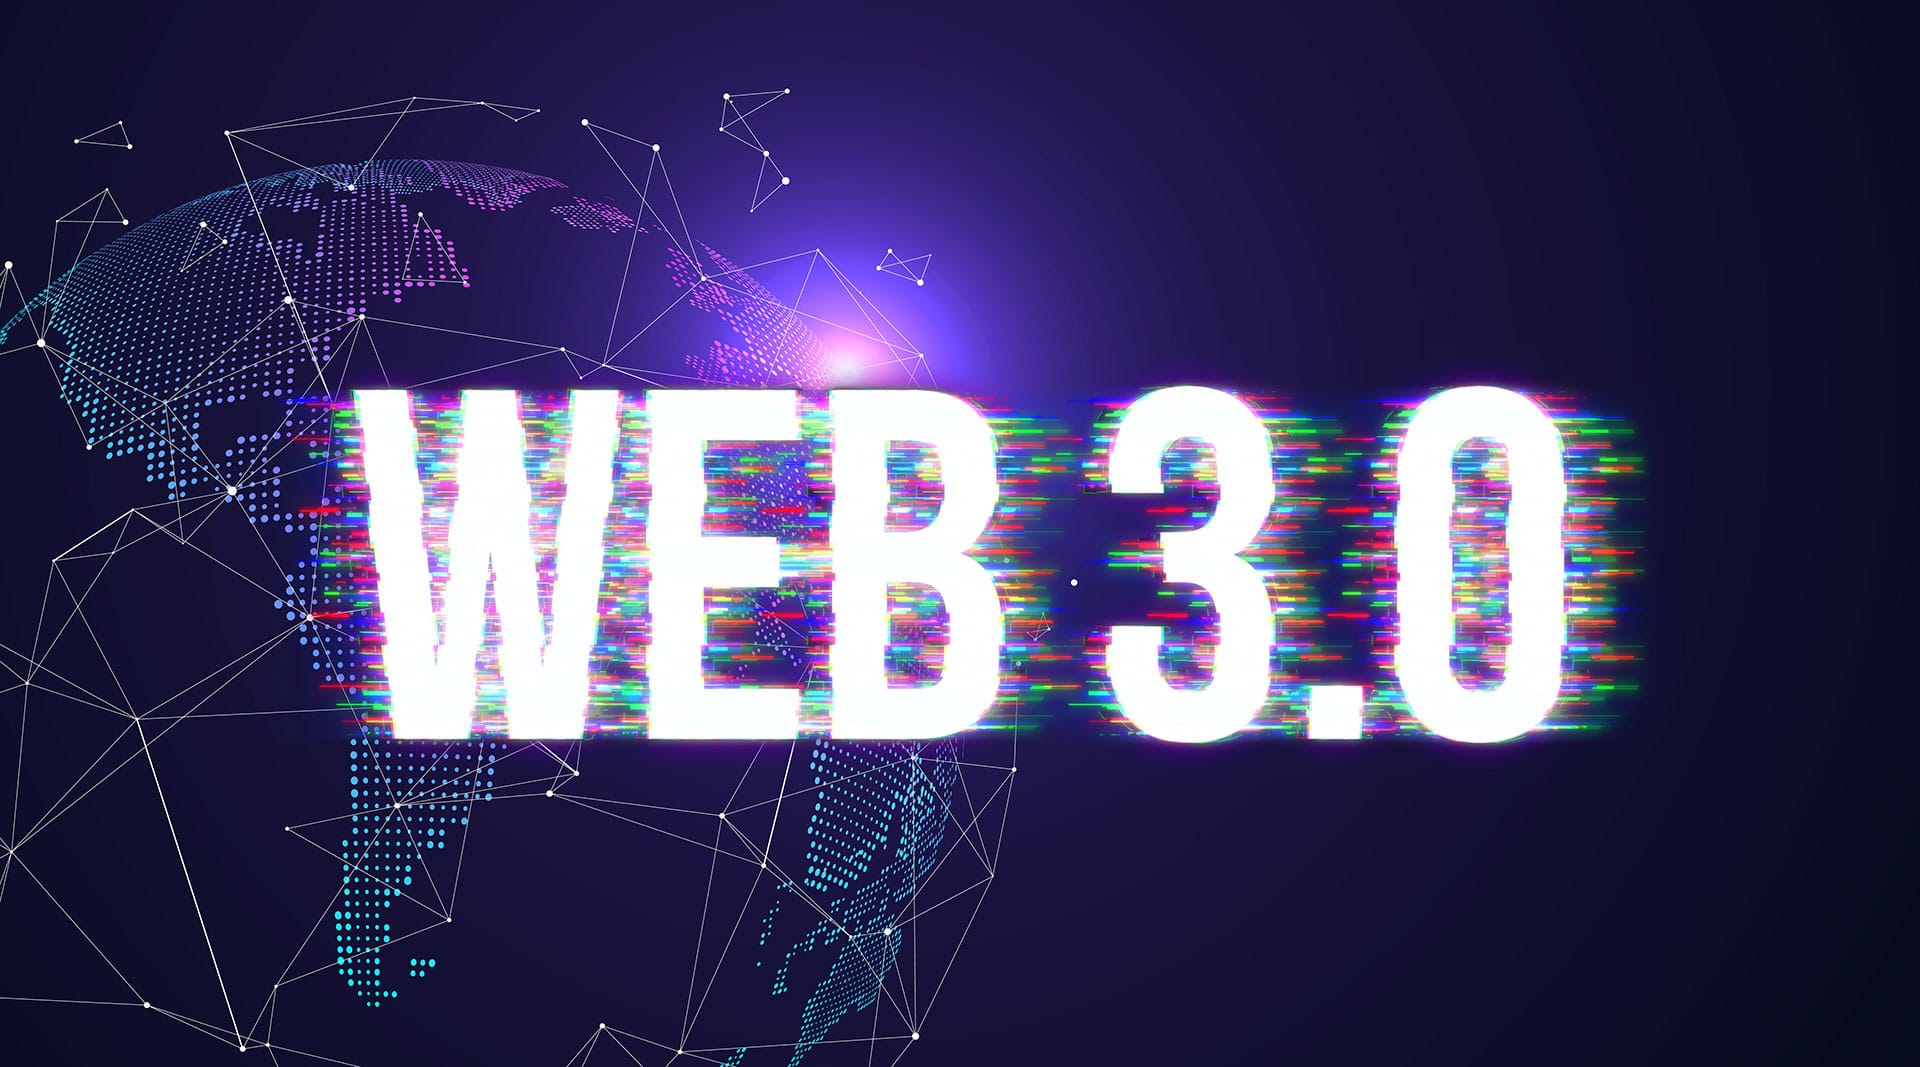 Web 3.0: A internet descentralizada - Morse News